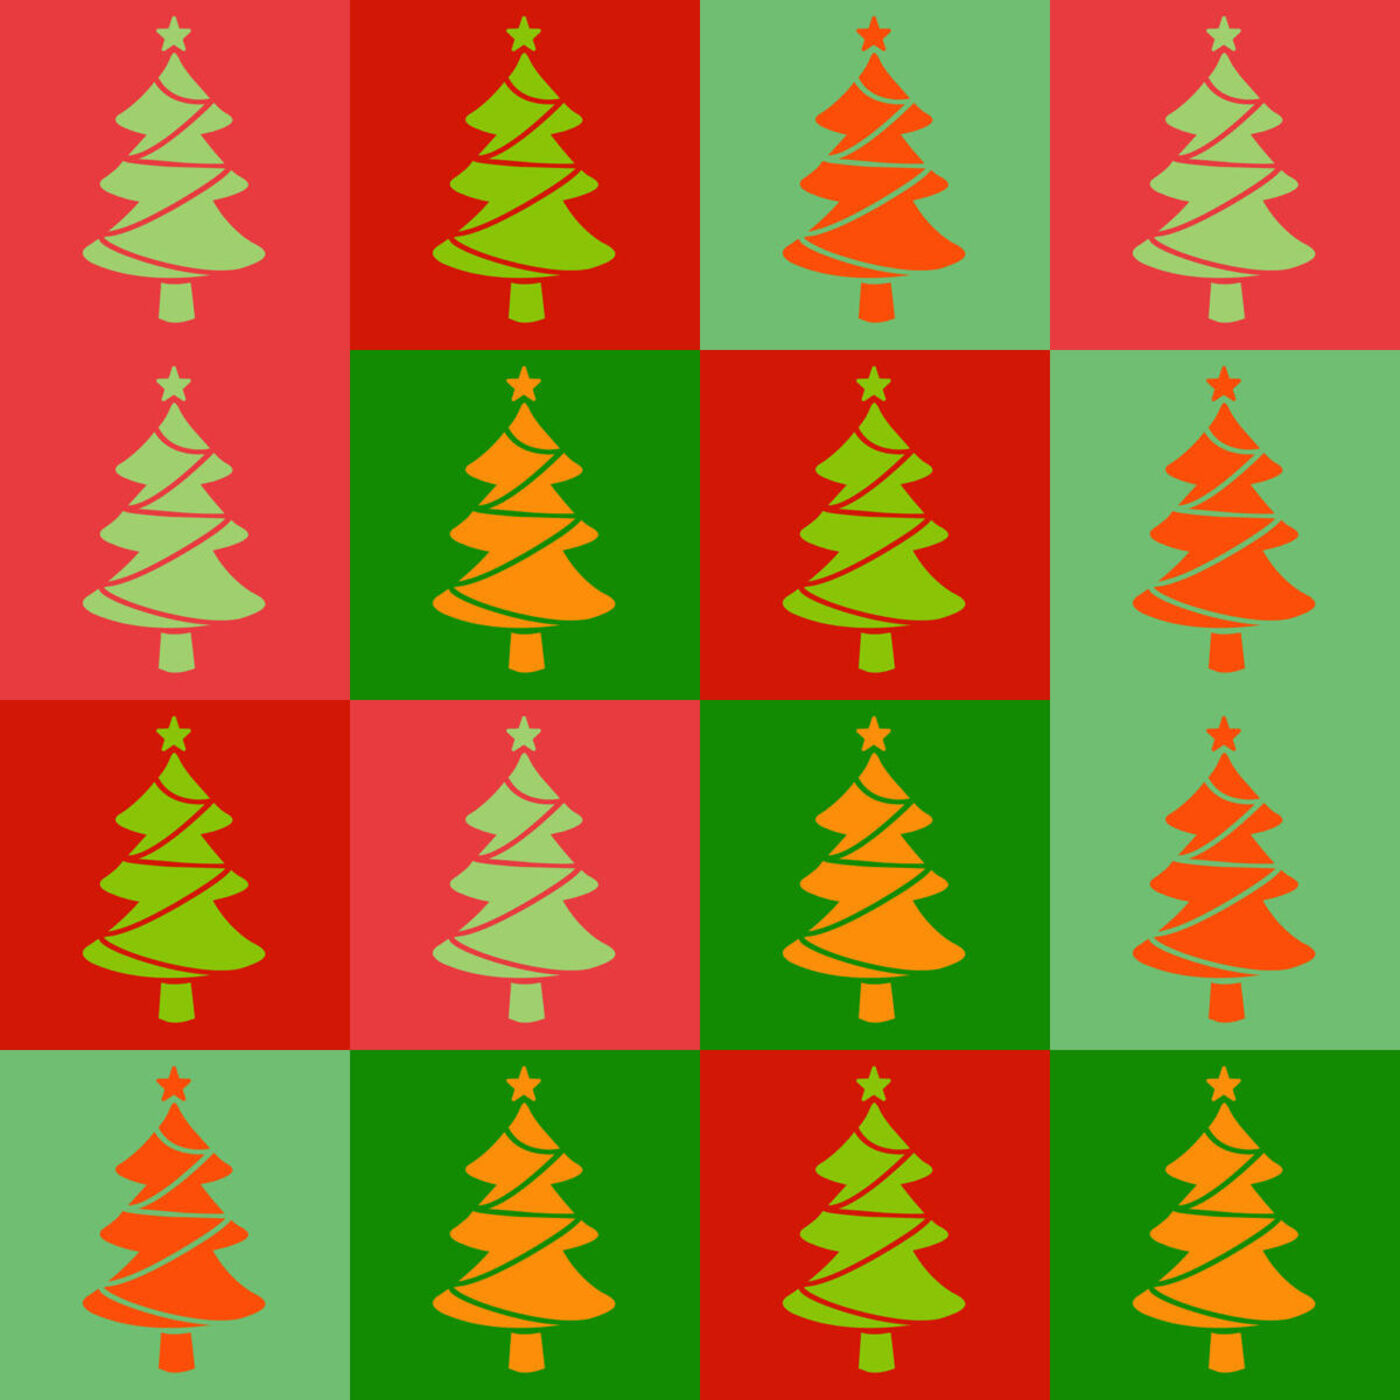 Christmas Trees 4 Ever